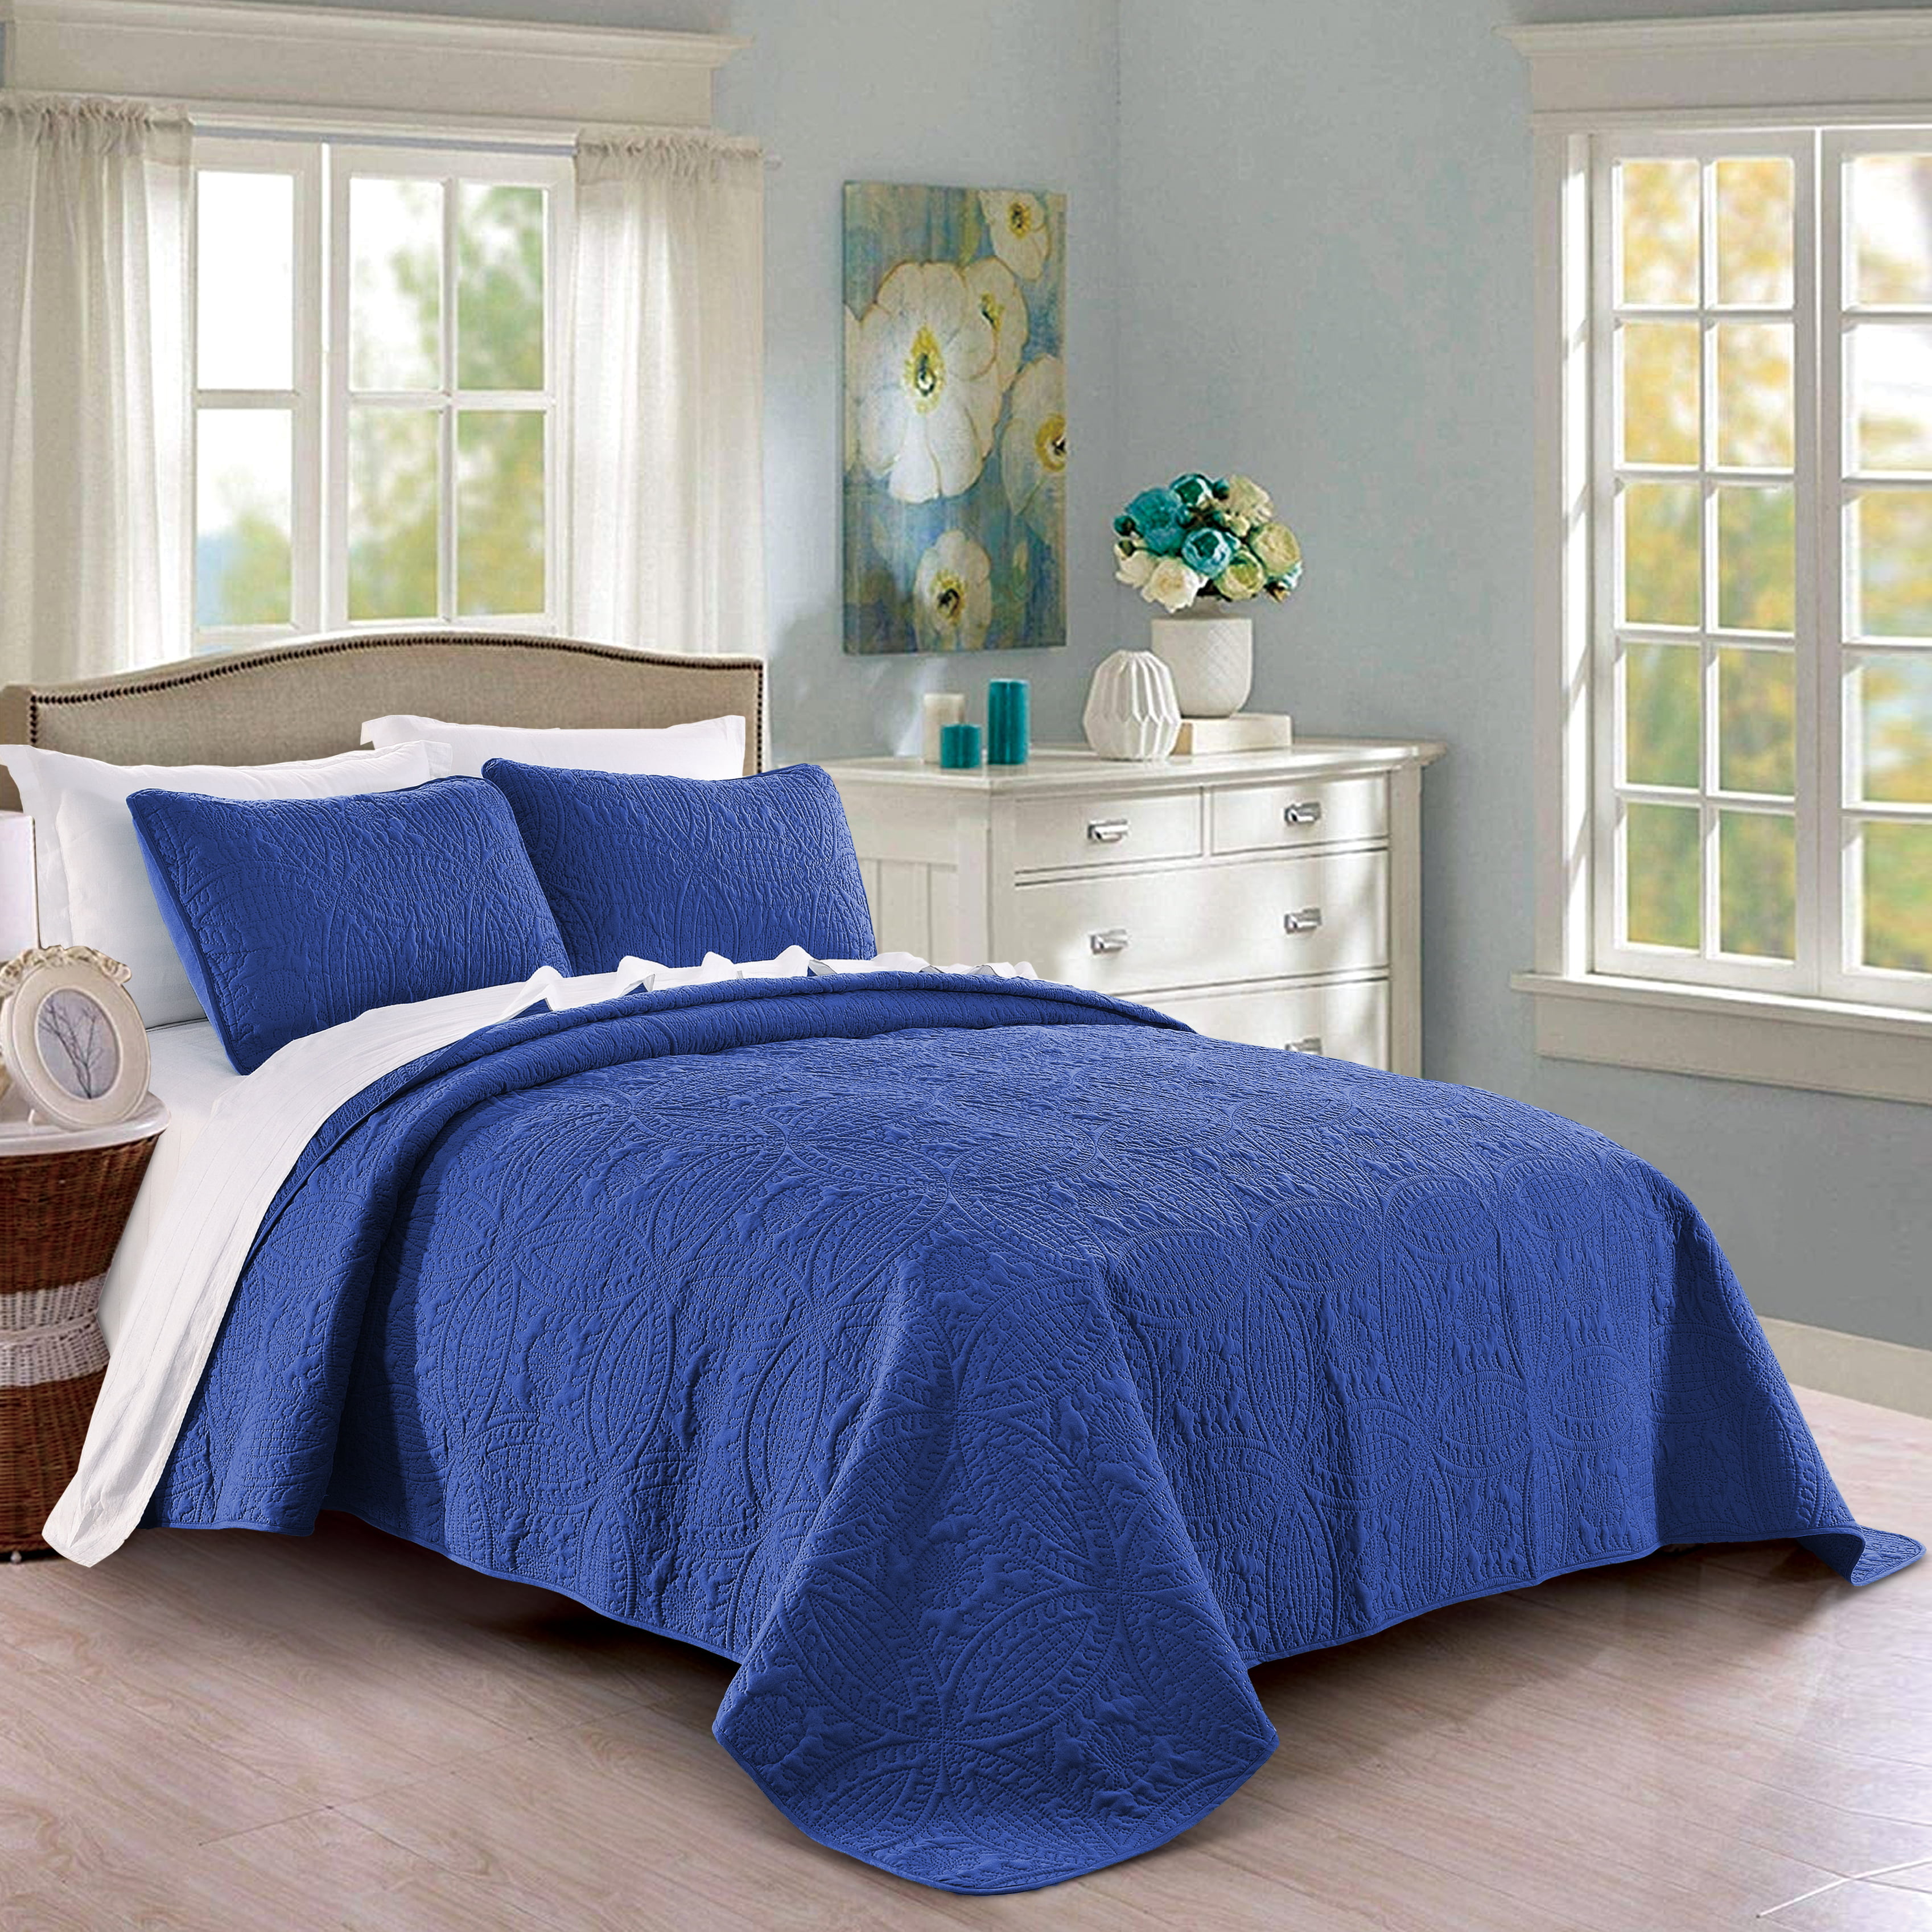 Quilt Set Full Queen Size Royal Blue, Blue Oversized Queen Bedspreads